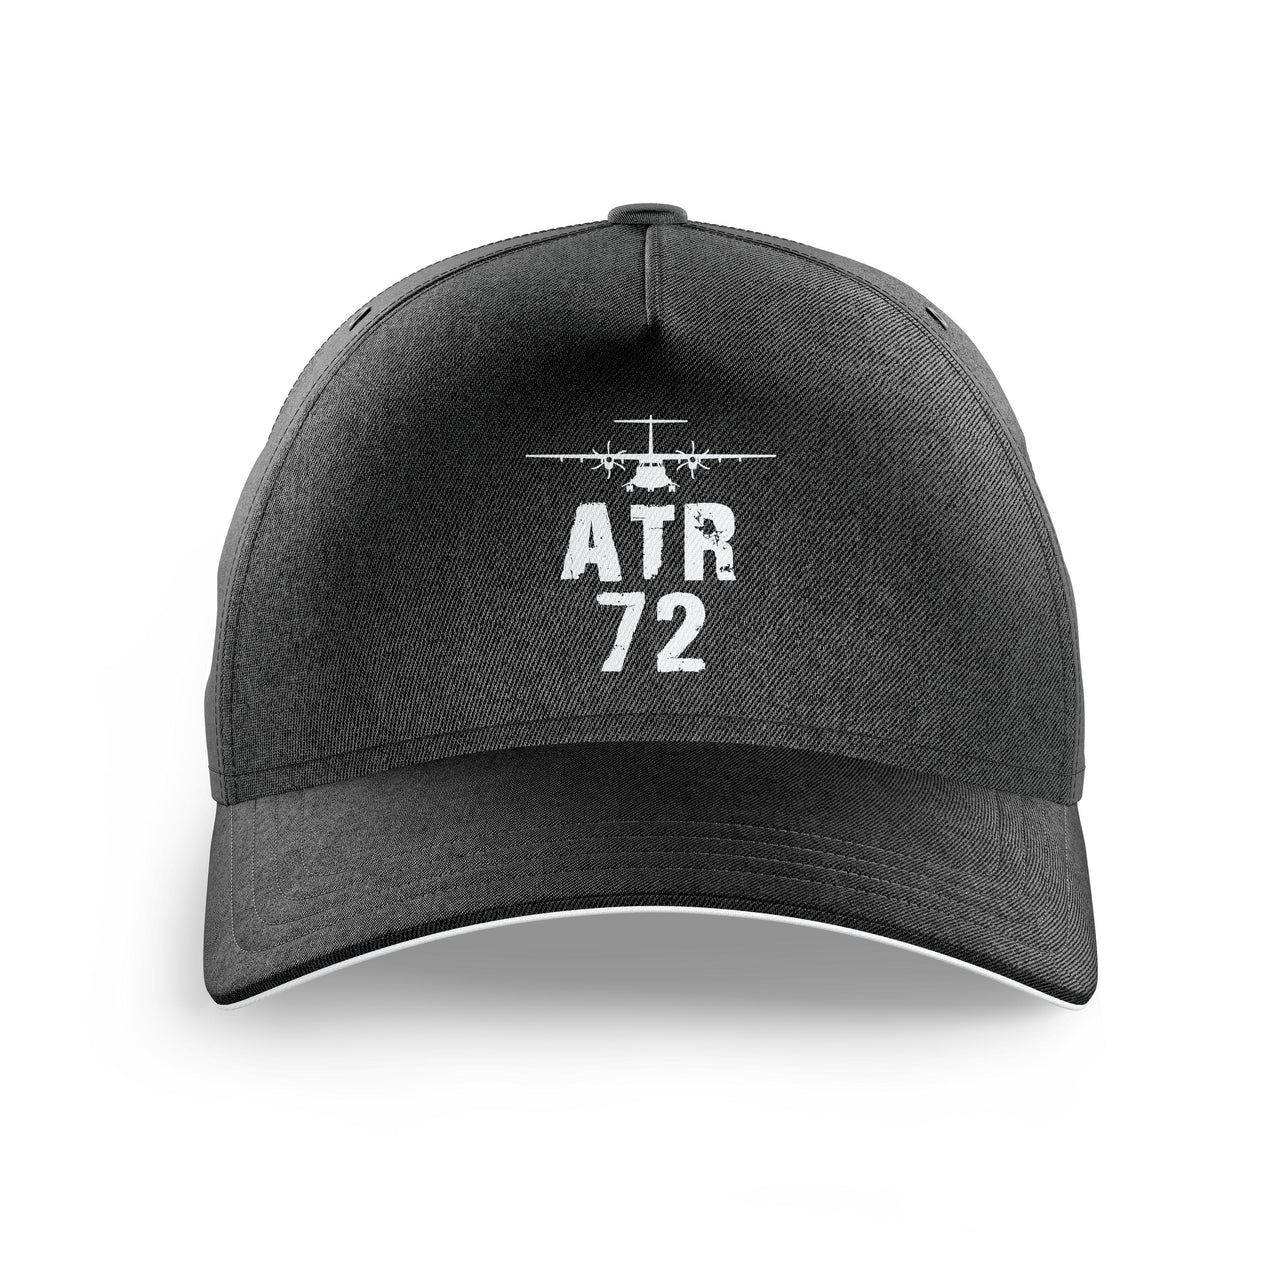 ATR-72 & Plane Printed Hats